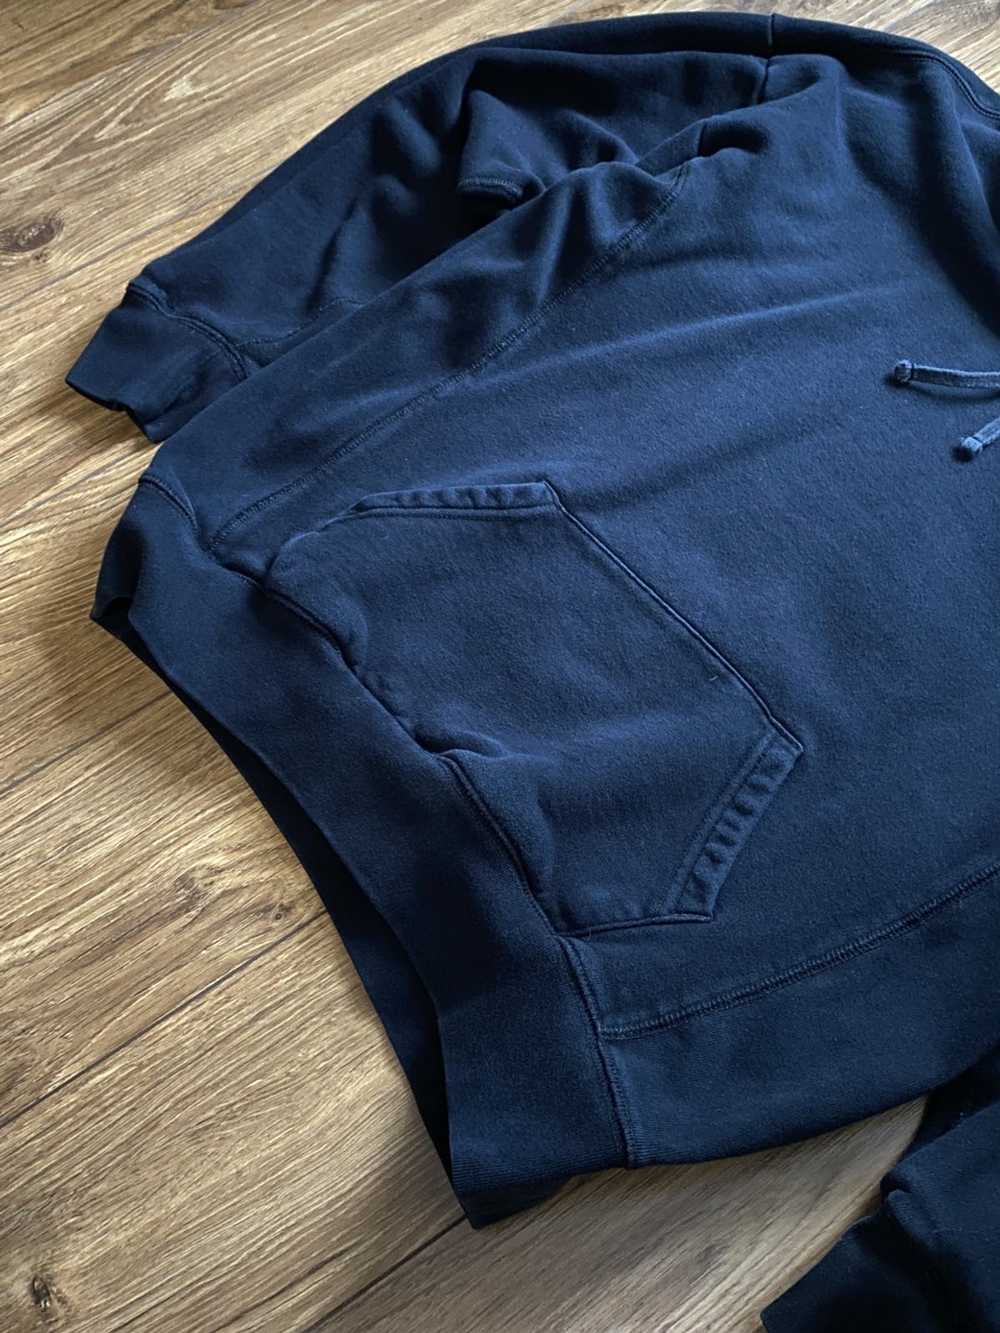 Patta × Streetwear Patta black hoodie size S-M - image 5